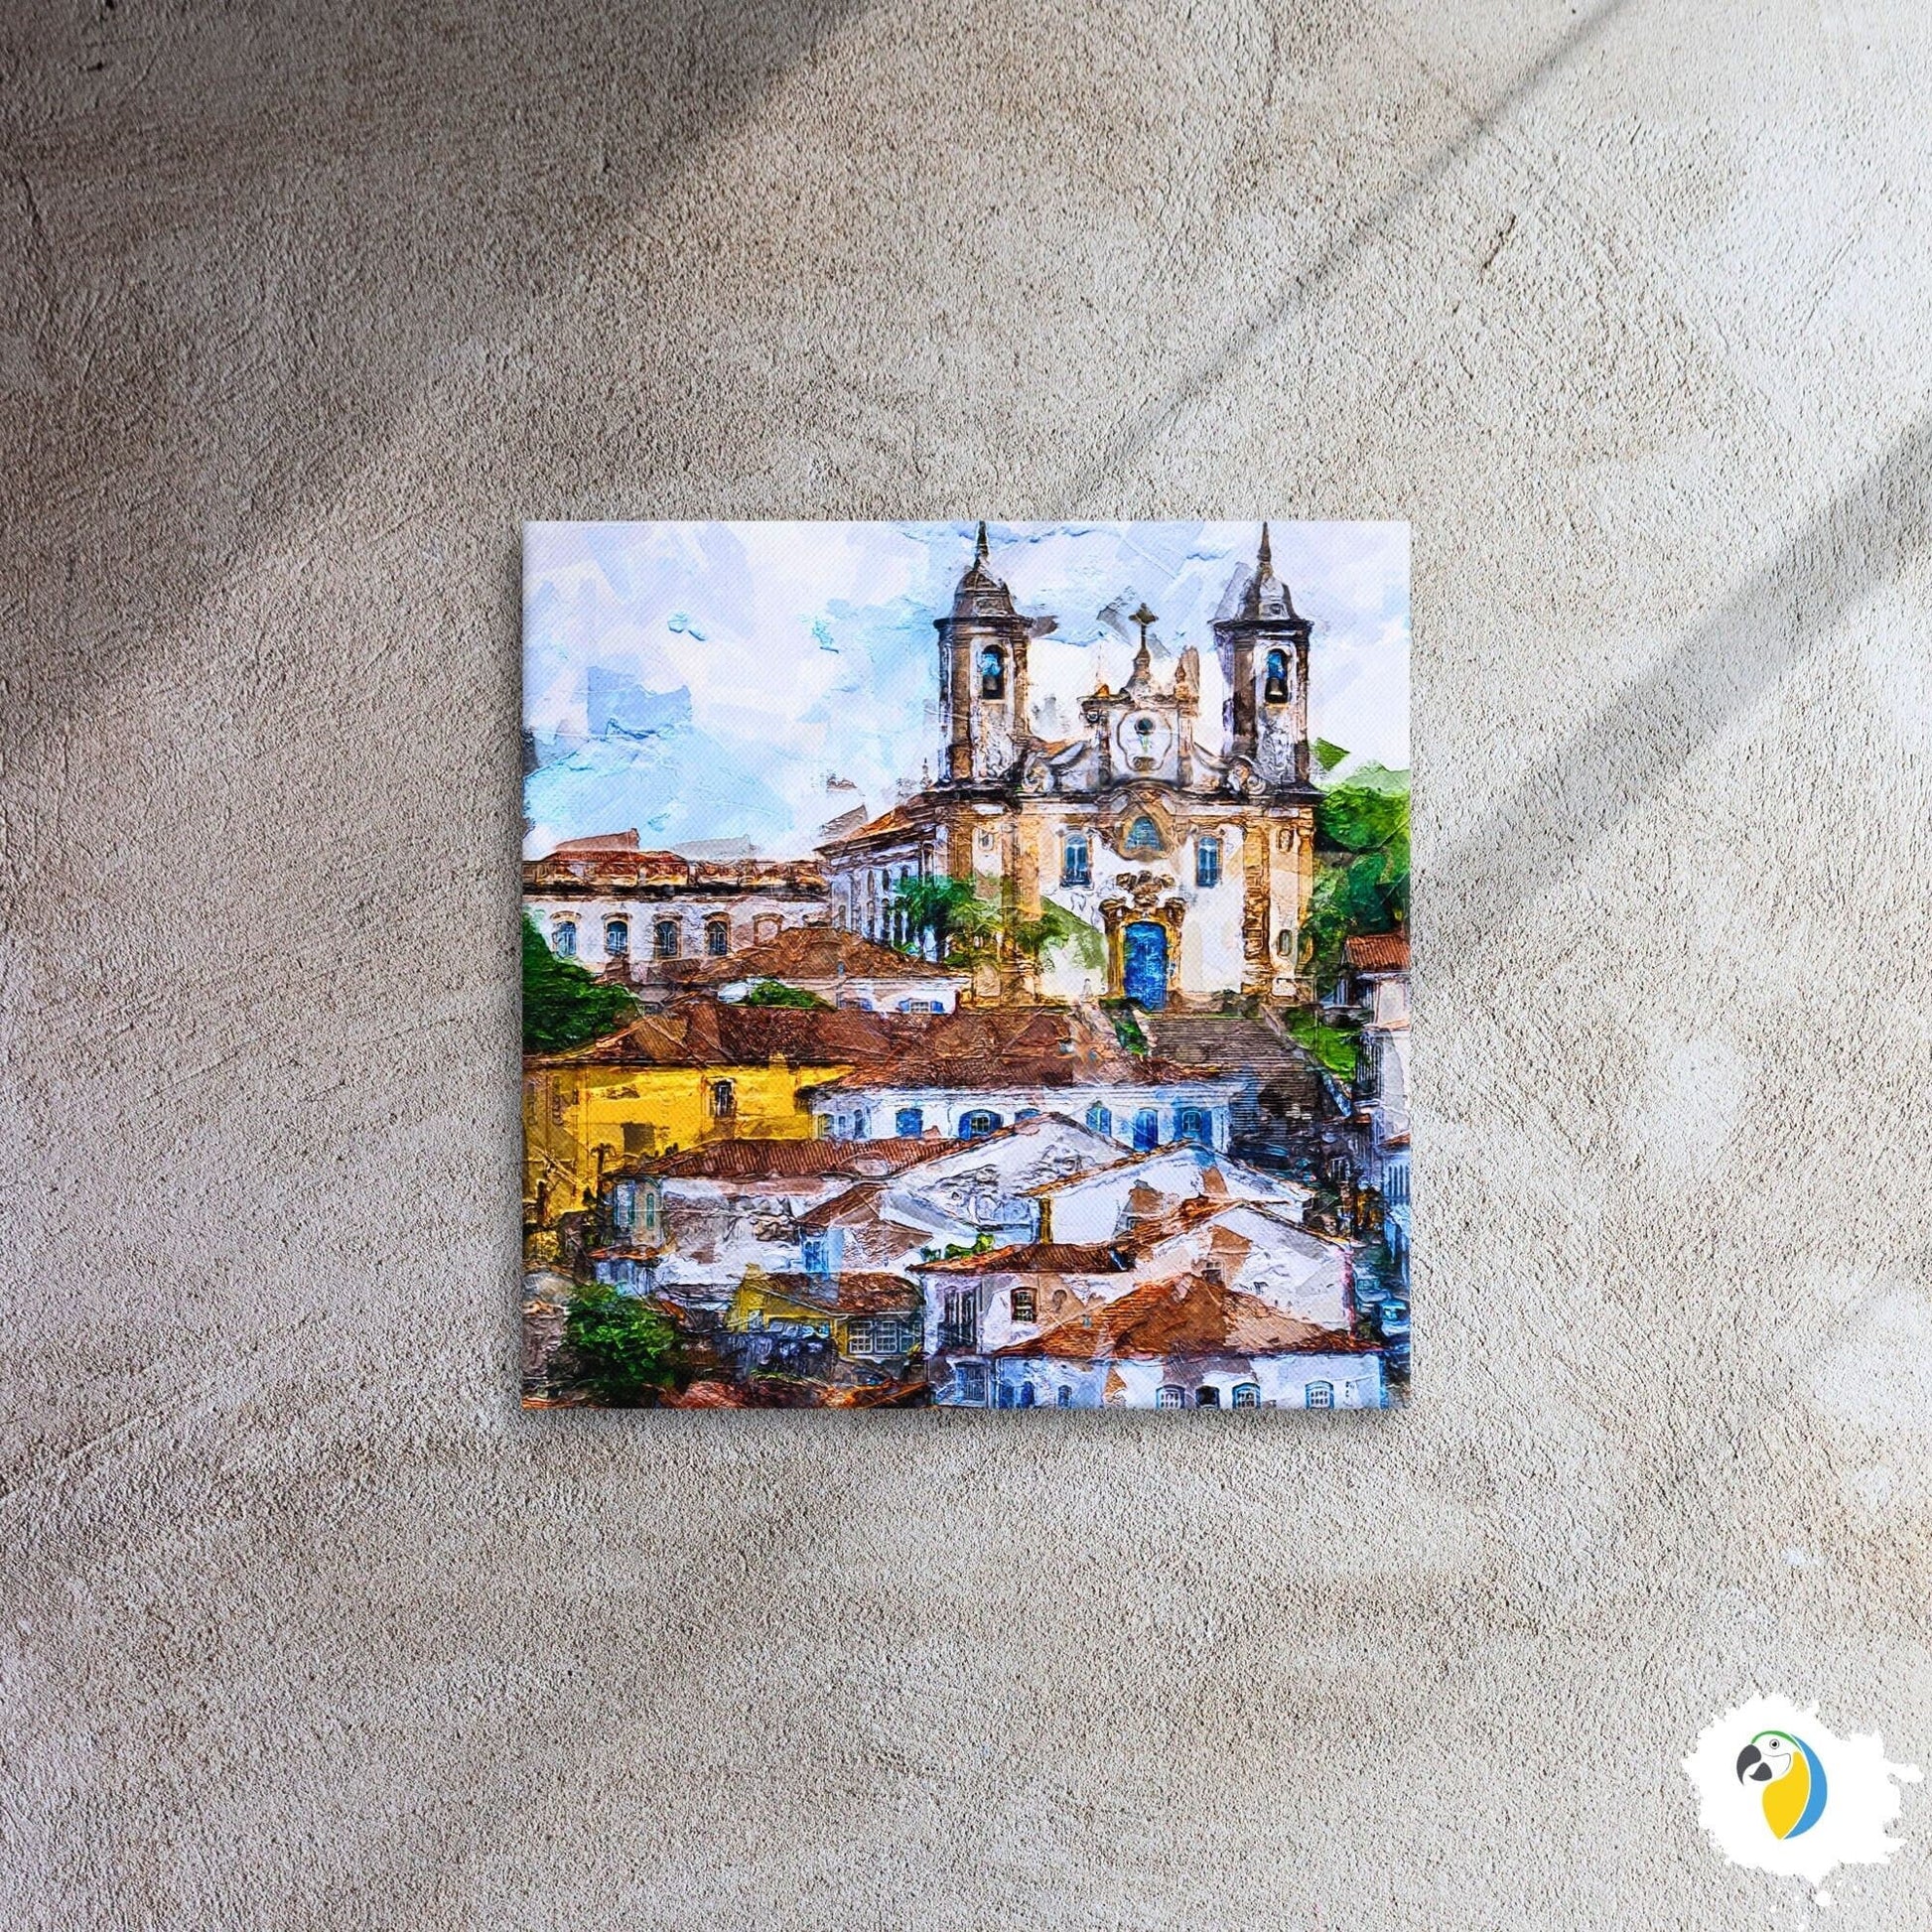 Painting Of Brazilian Village Ouro Preto | Brazil Minas Gerais Digital Thin Canvas Print Retro Decor | Impressionist Vintage Wall Art | Papagaio Studio Etsy Shop